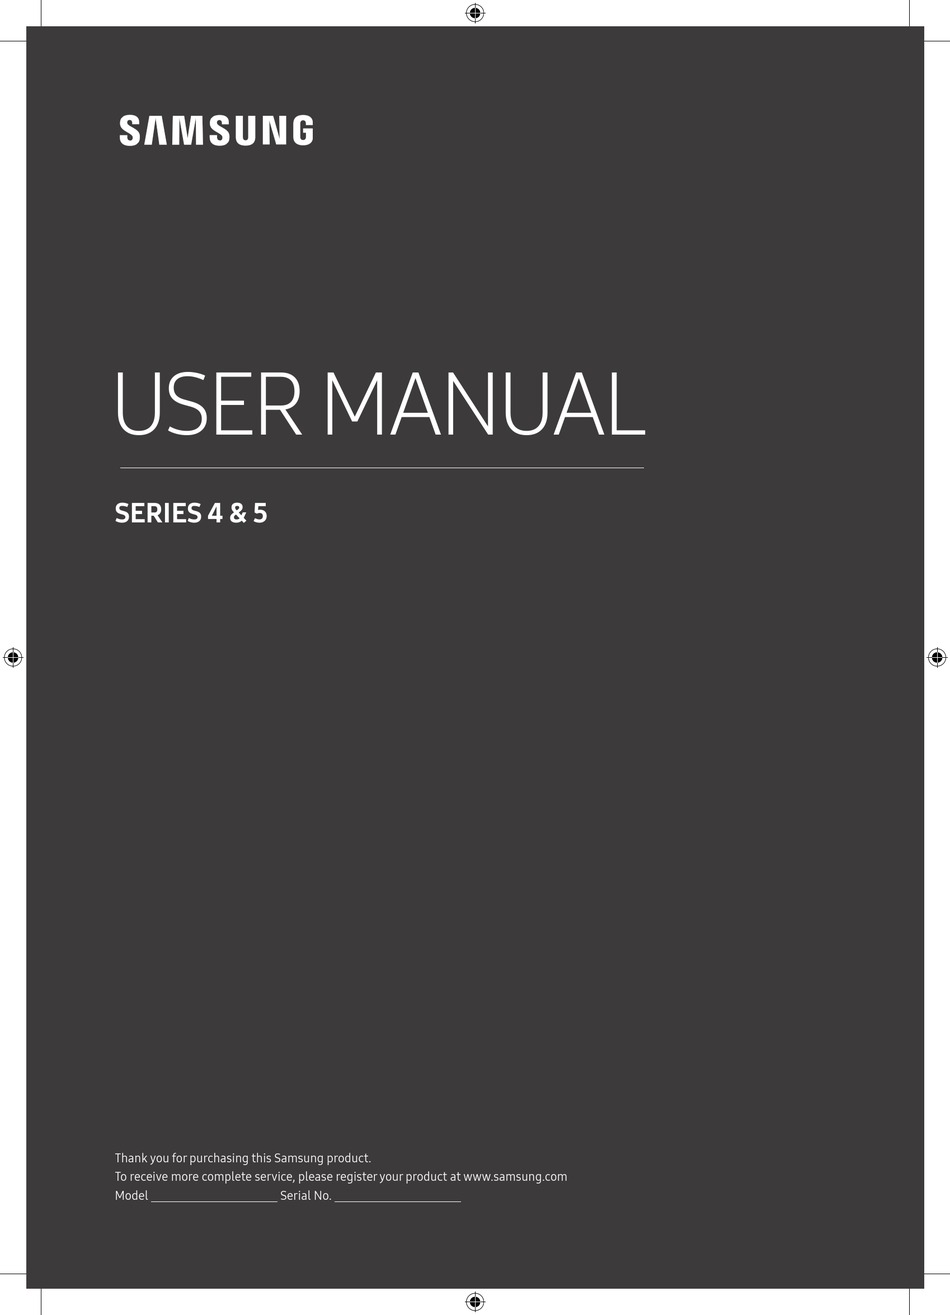 SAMSUNG 5 SERIES USER MANUAL Pdf Download | ManualsLib